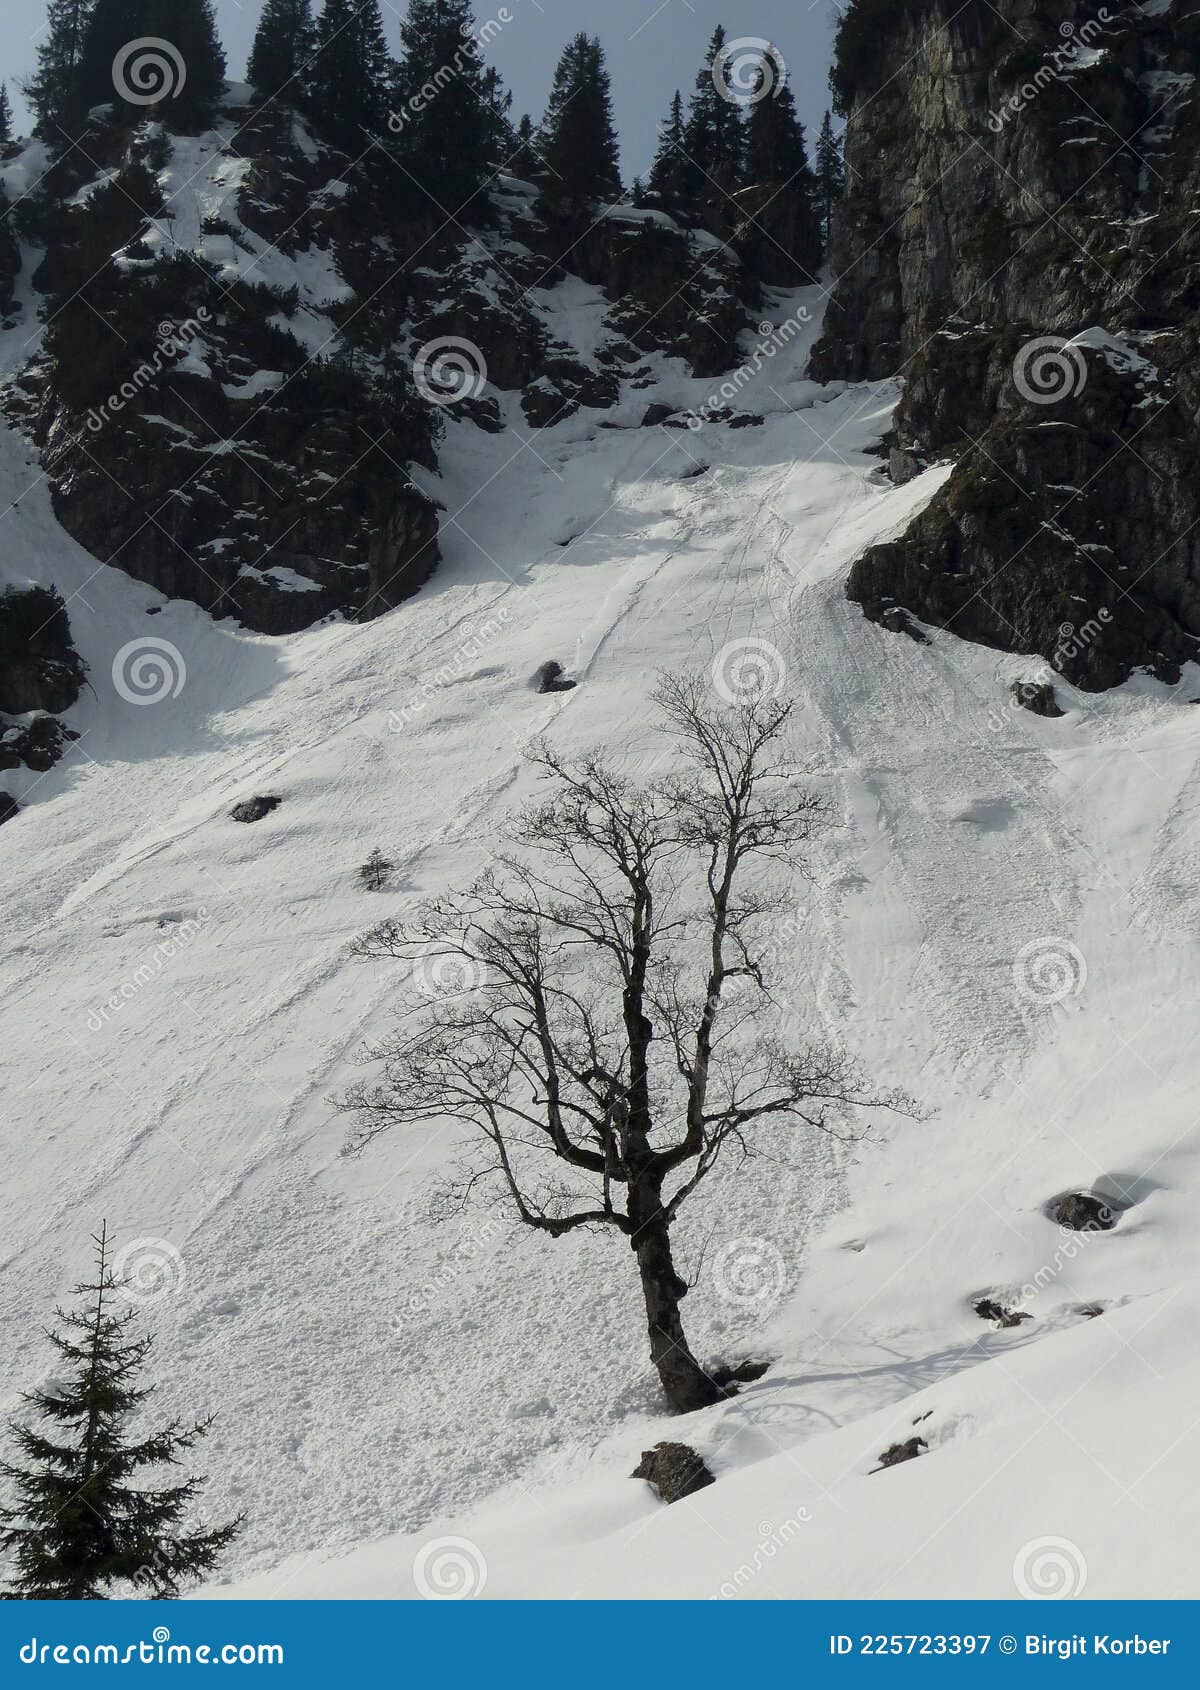 snow avalance in bavarian alps, germany, in wintertime